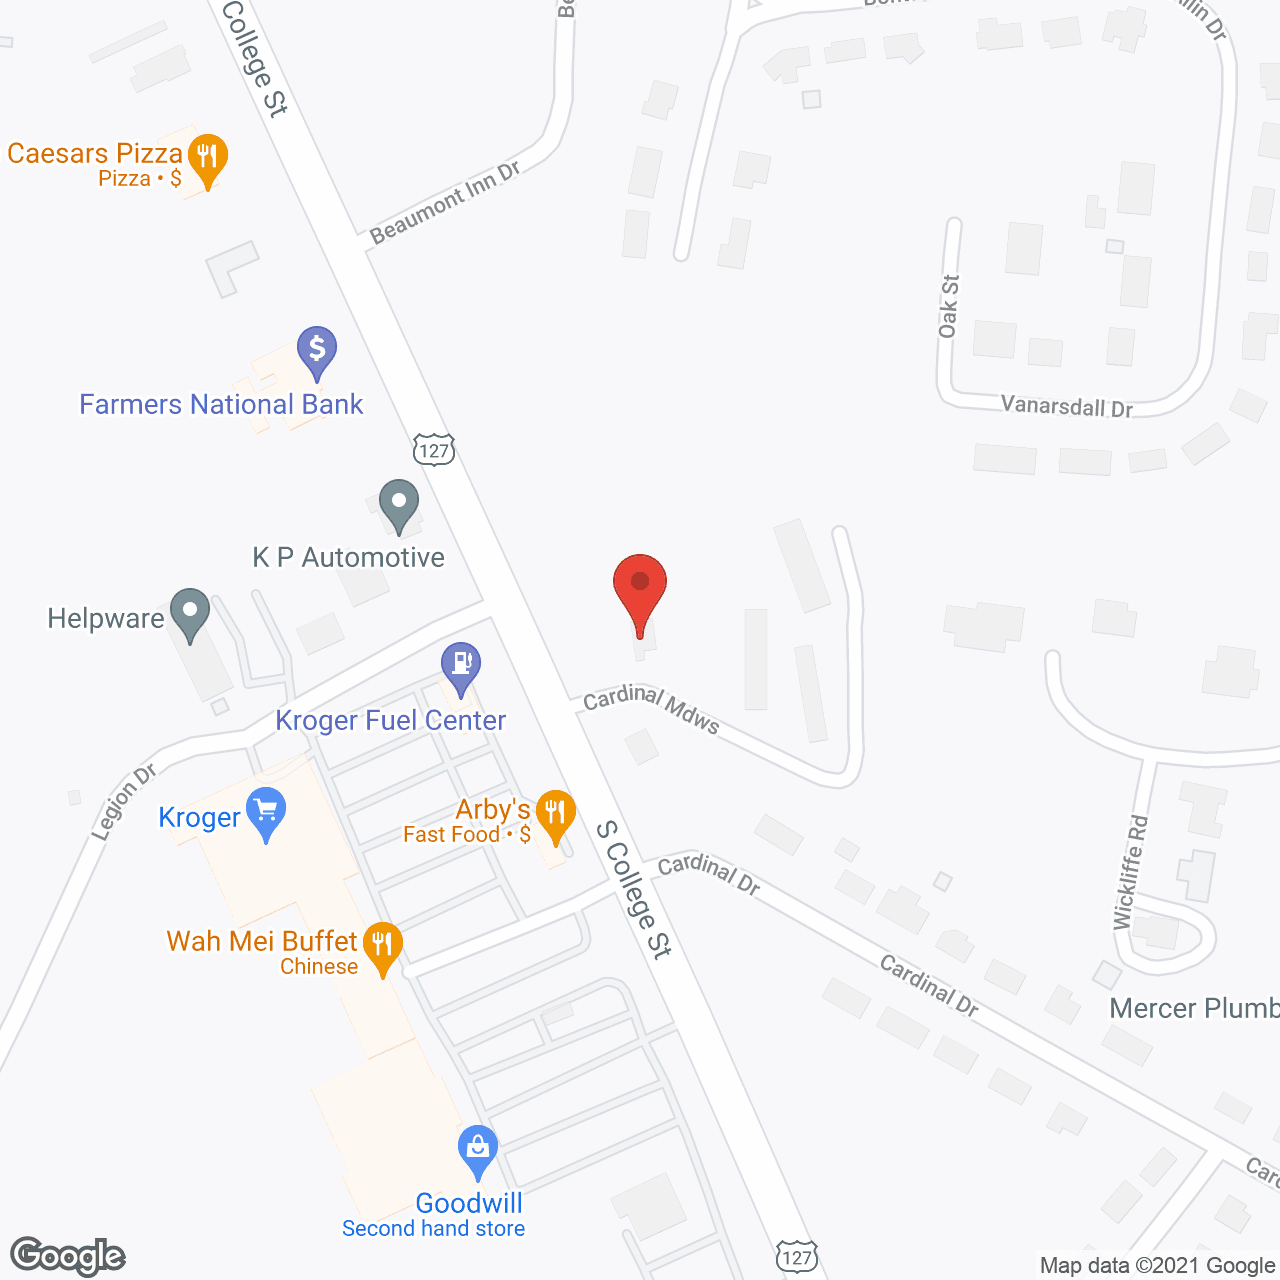 Cardinal Meadow in google map